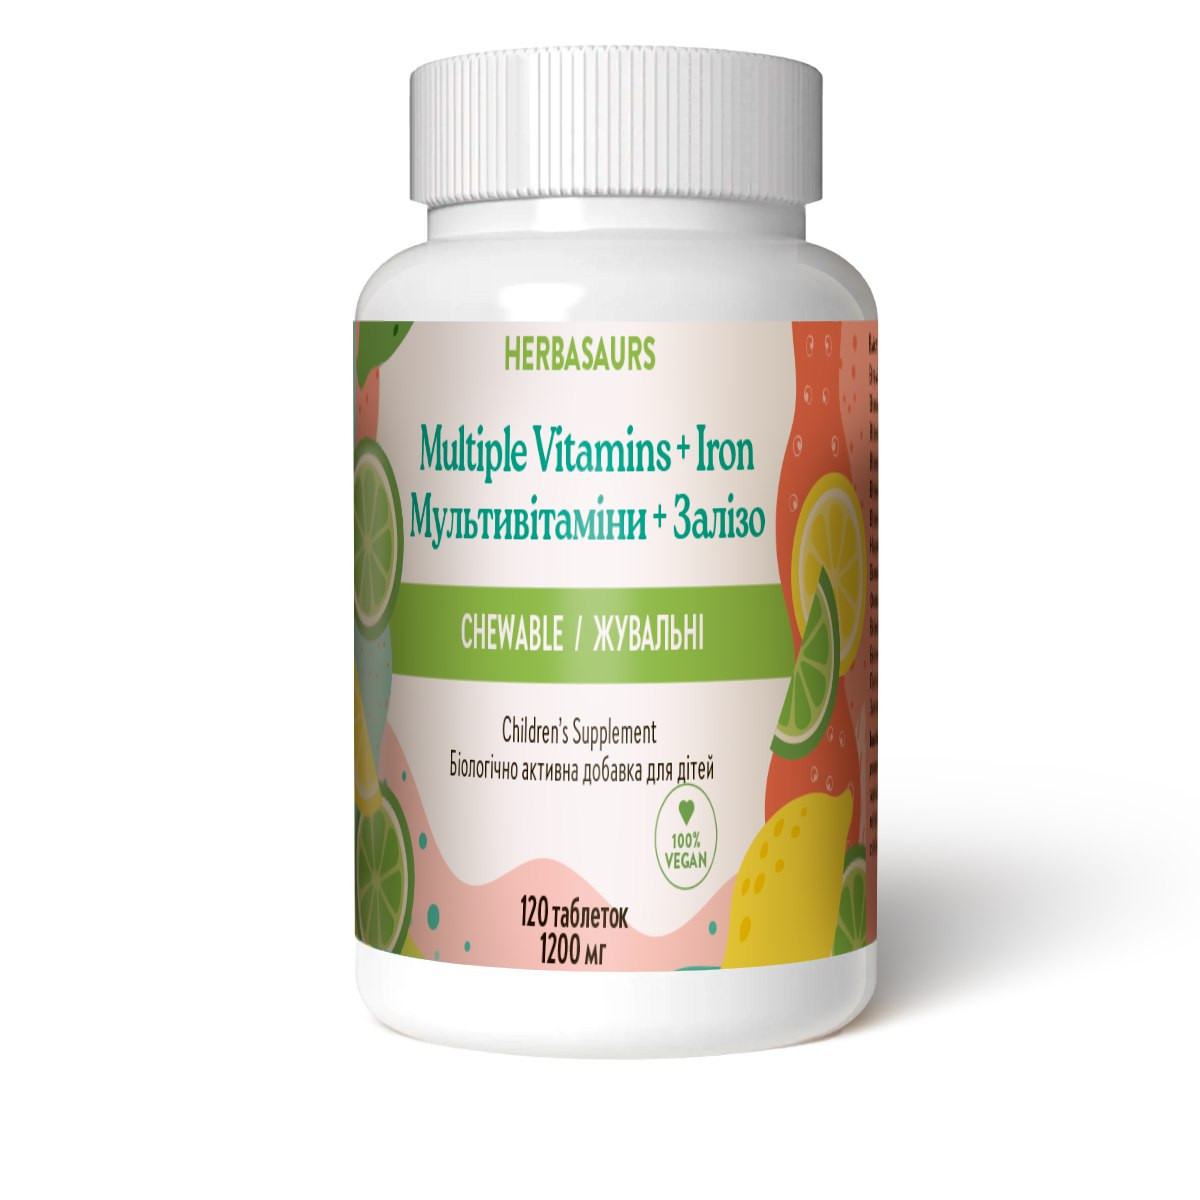 Children's Chewable Multiple Vitamins plus Iron - Herbasaurs - Мультивитамины с железом для детей - Витазаврики - БАД Nature's Sunshine Products (NSP)